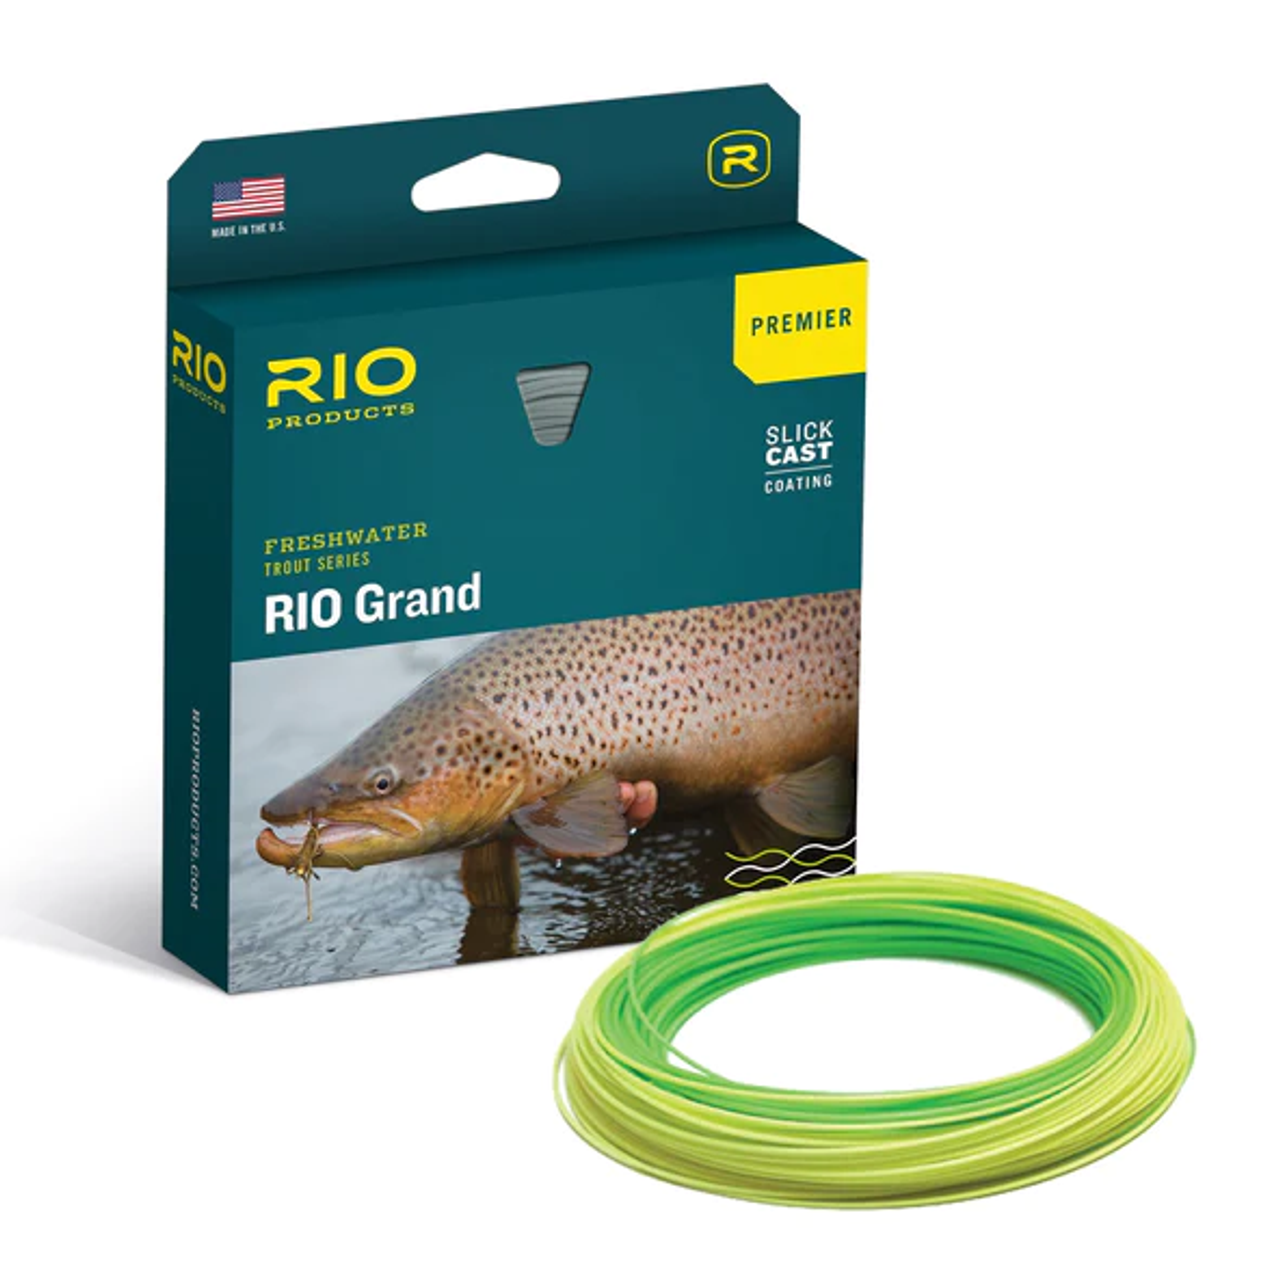 Rio Premier Grand Fly Line - Pale Green/Yellow - WF5F